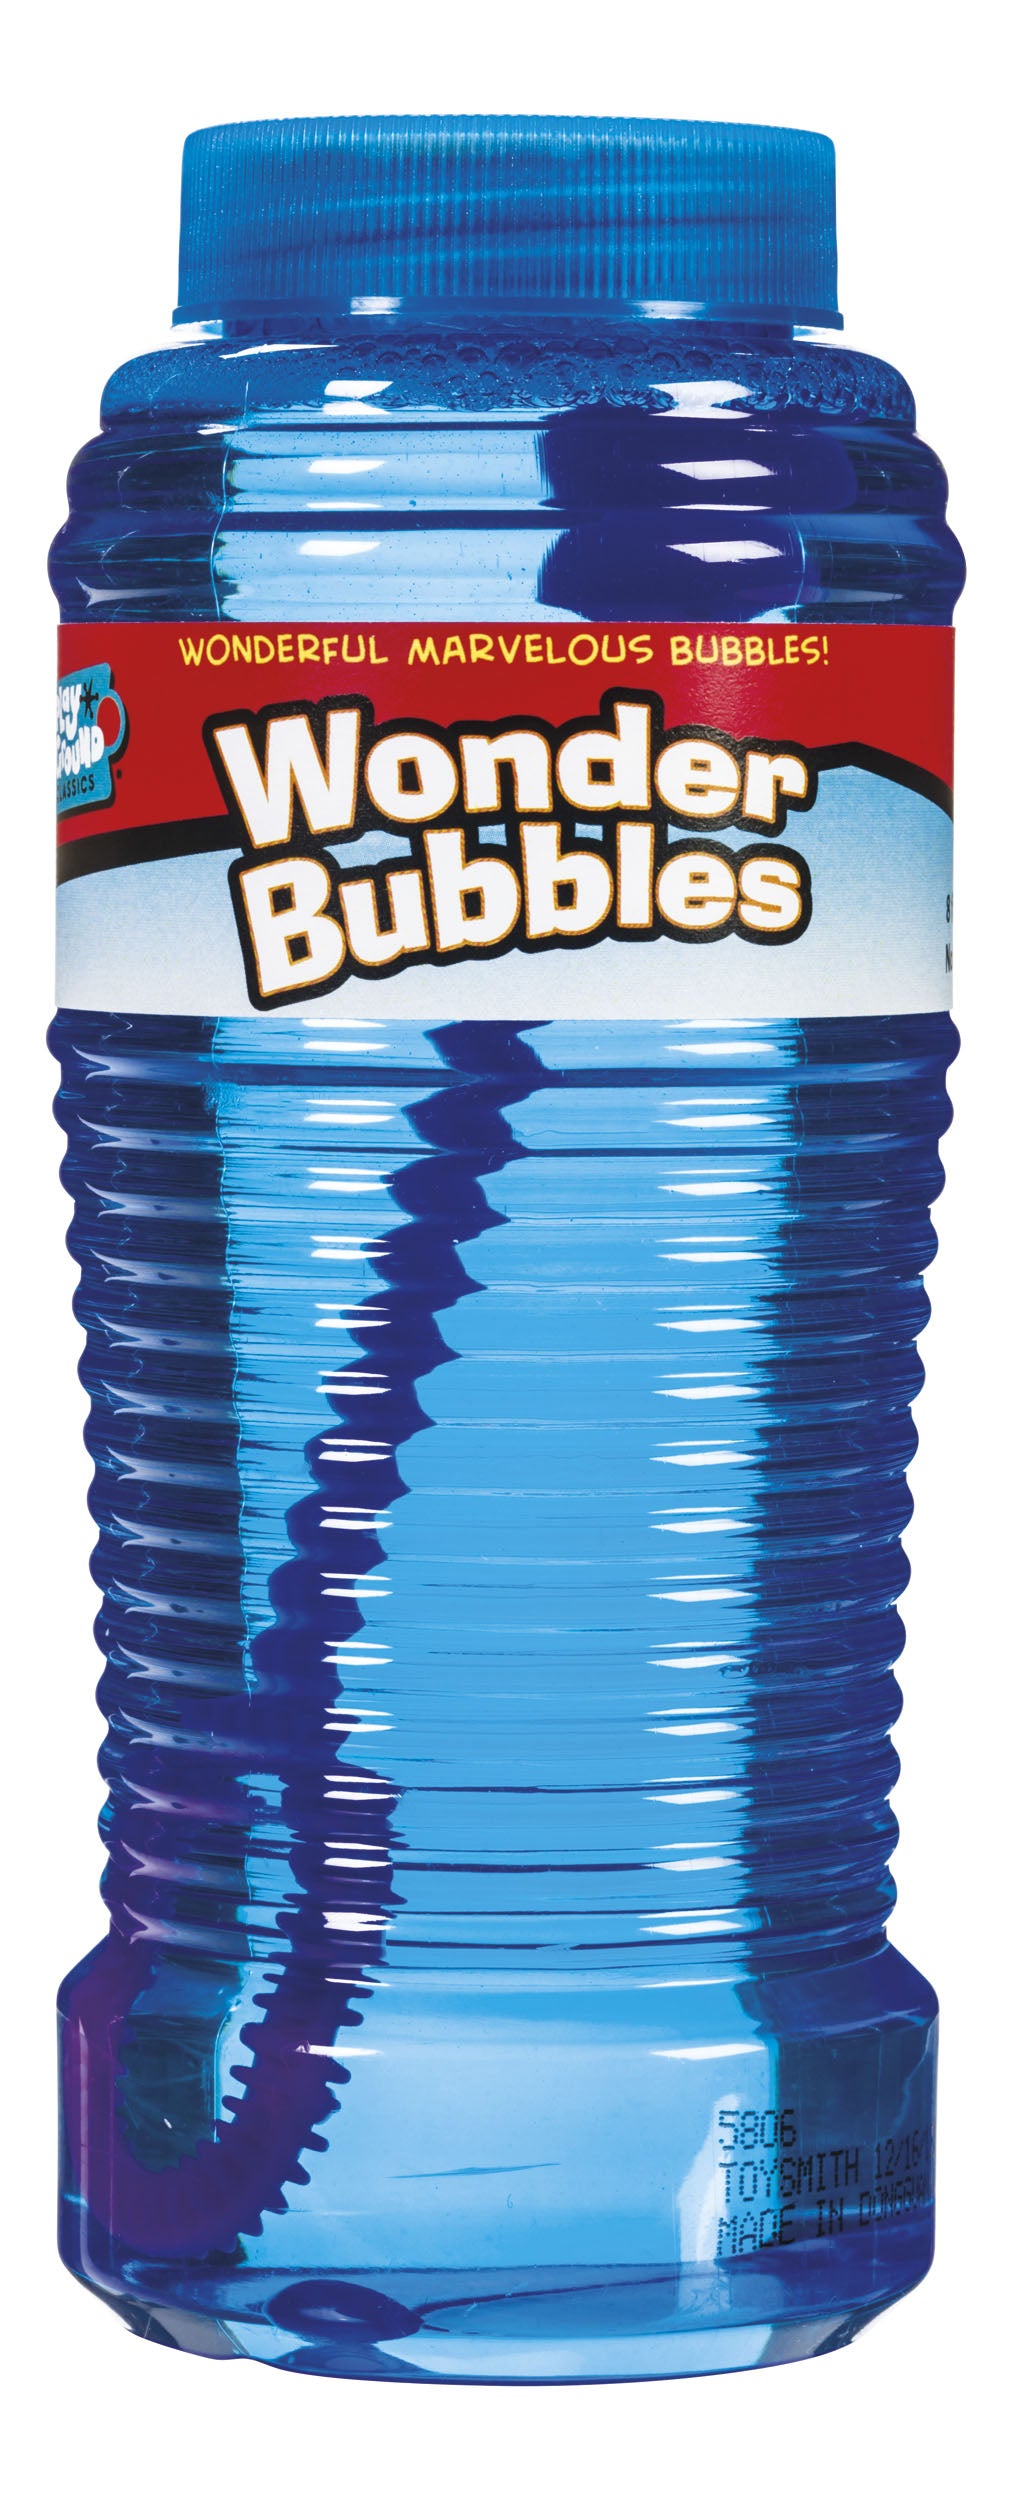 Playground Classics Wonder Bubbles 8oz